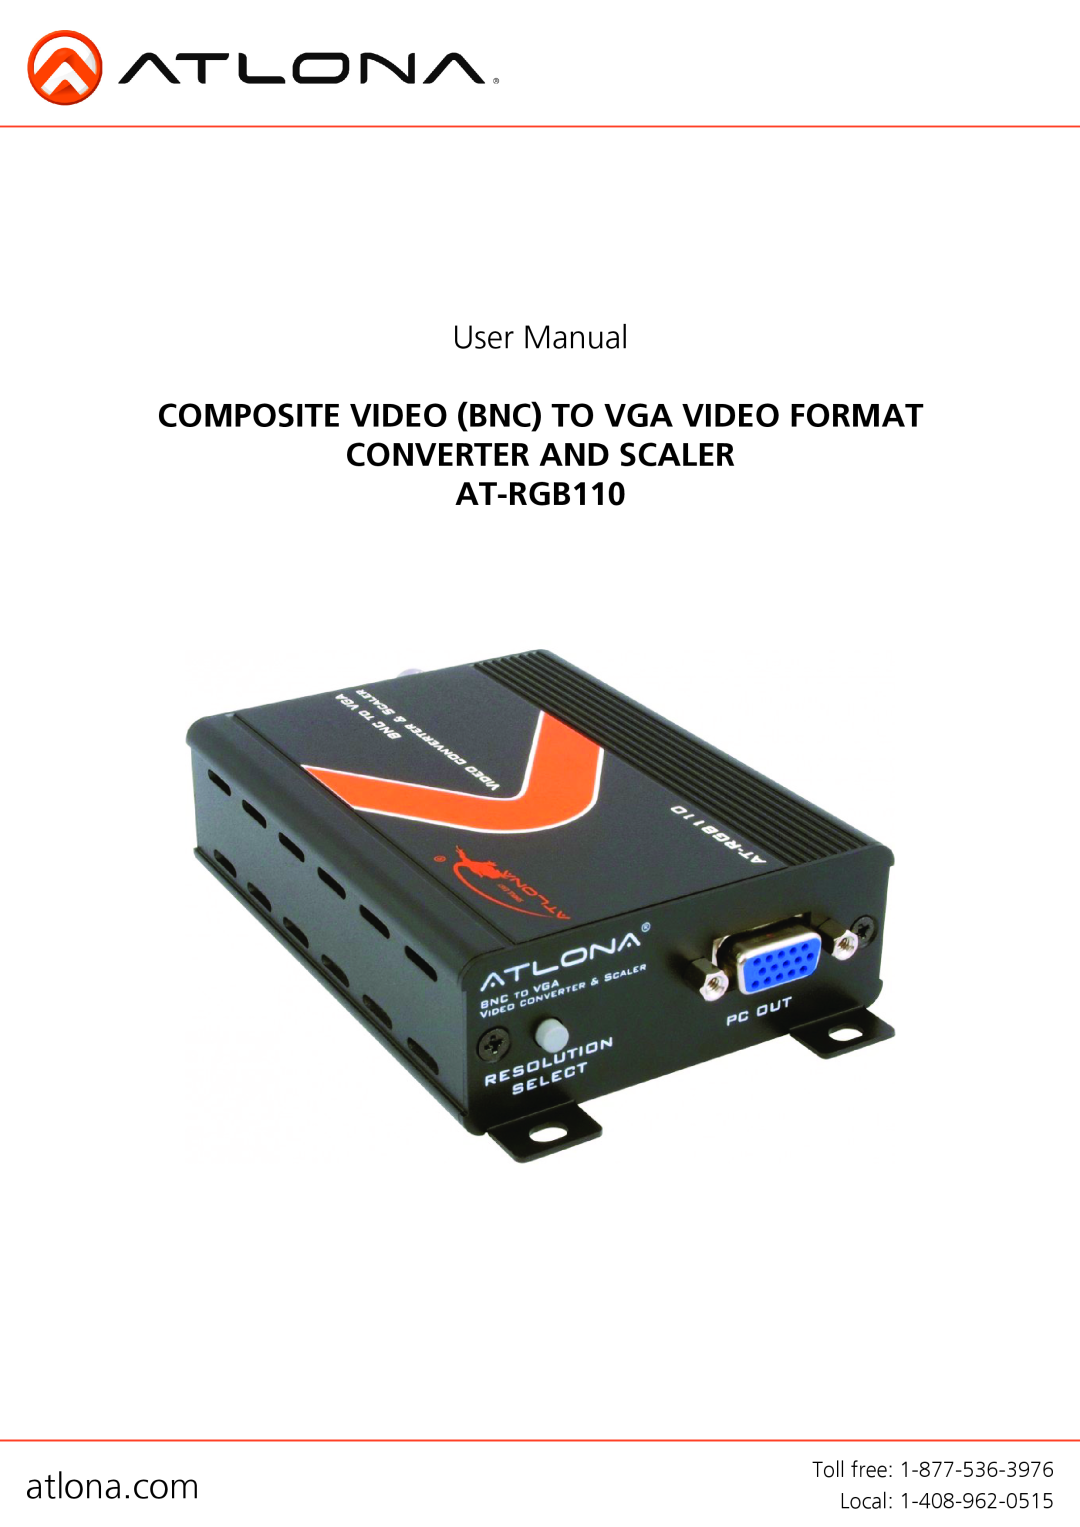 Atlona AT-RGB110 user manual atlona.com, Composite Video Bnc To Vga Video Format Converter And Scaler 